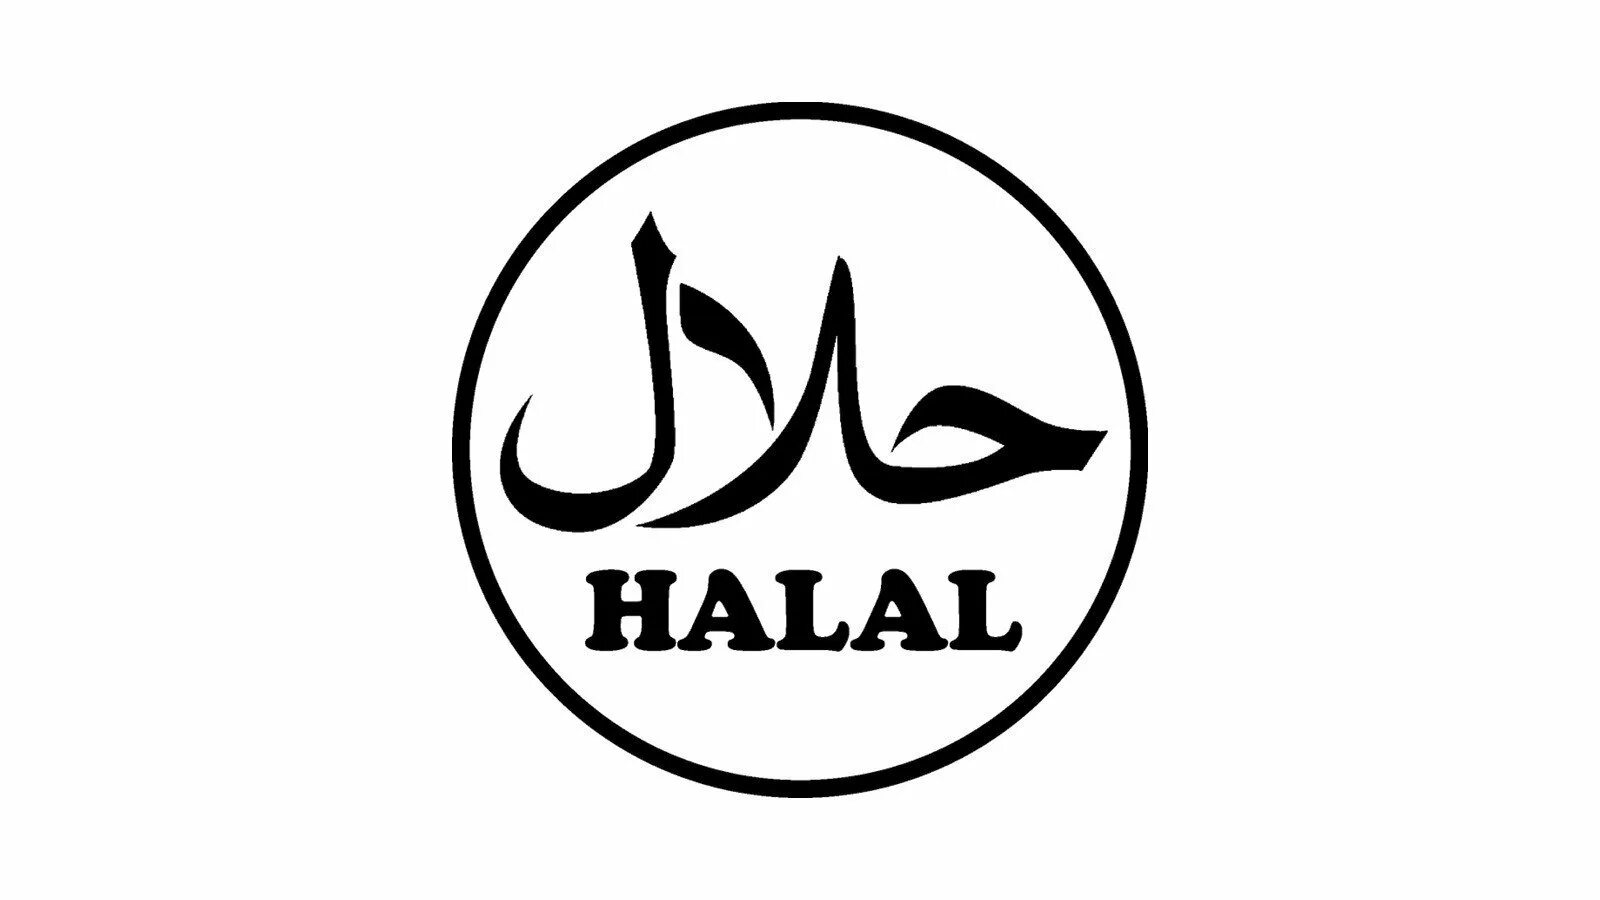 Халяль 5. Халяль логотип. Печать Халяль. Халяль надпись. Halal печать.